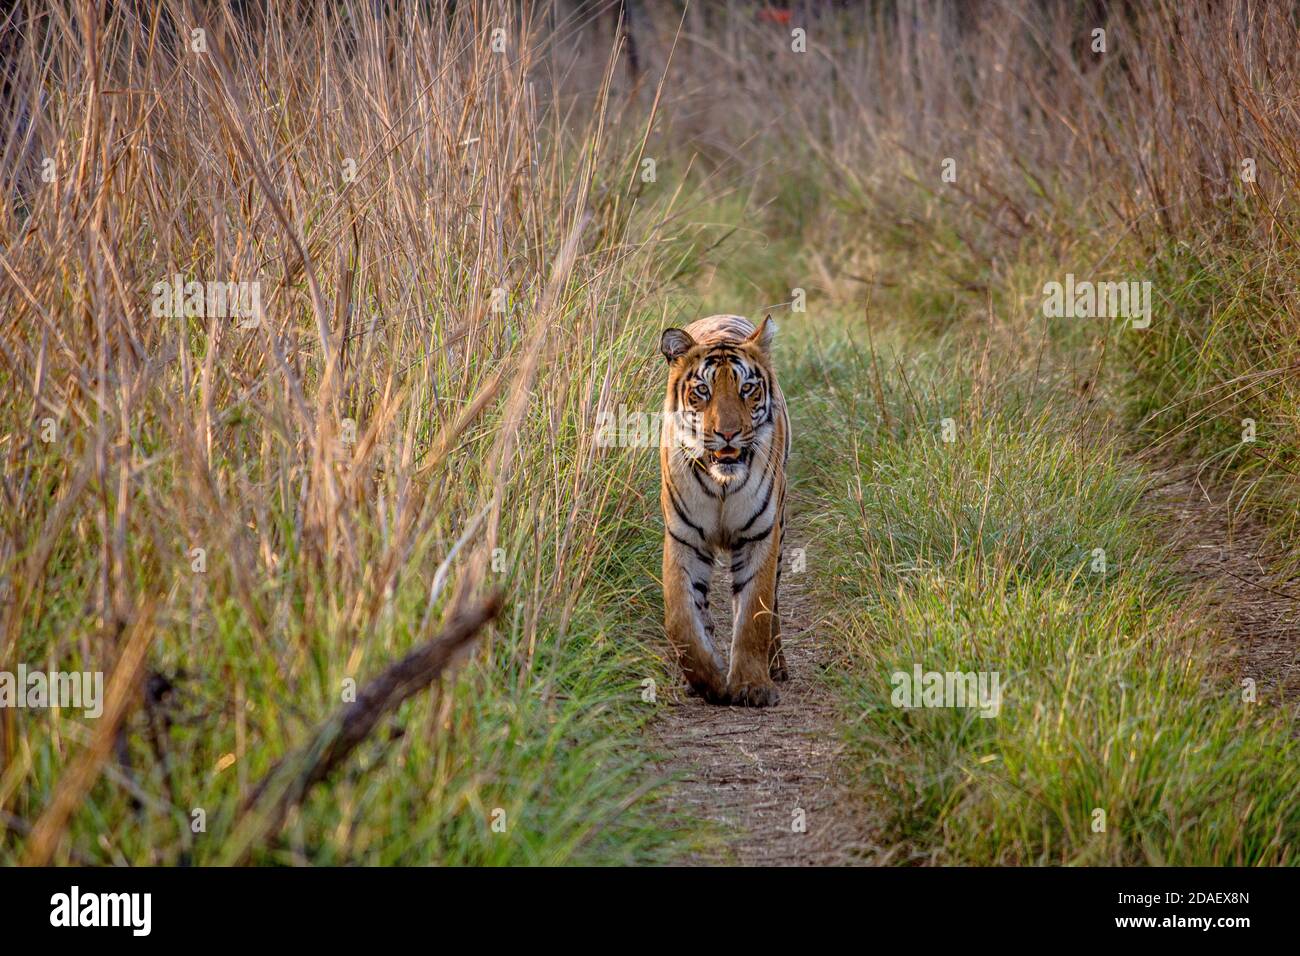 tadoba tigress caminar en la vista frontal del sendero Foto de stock